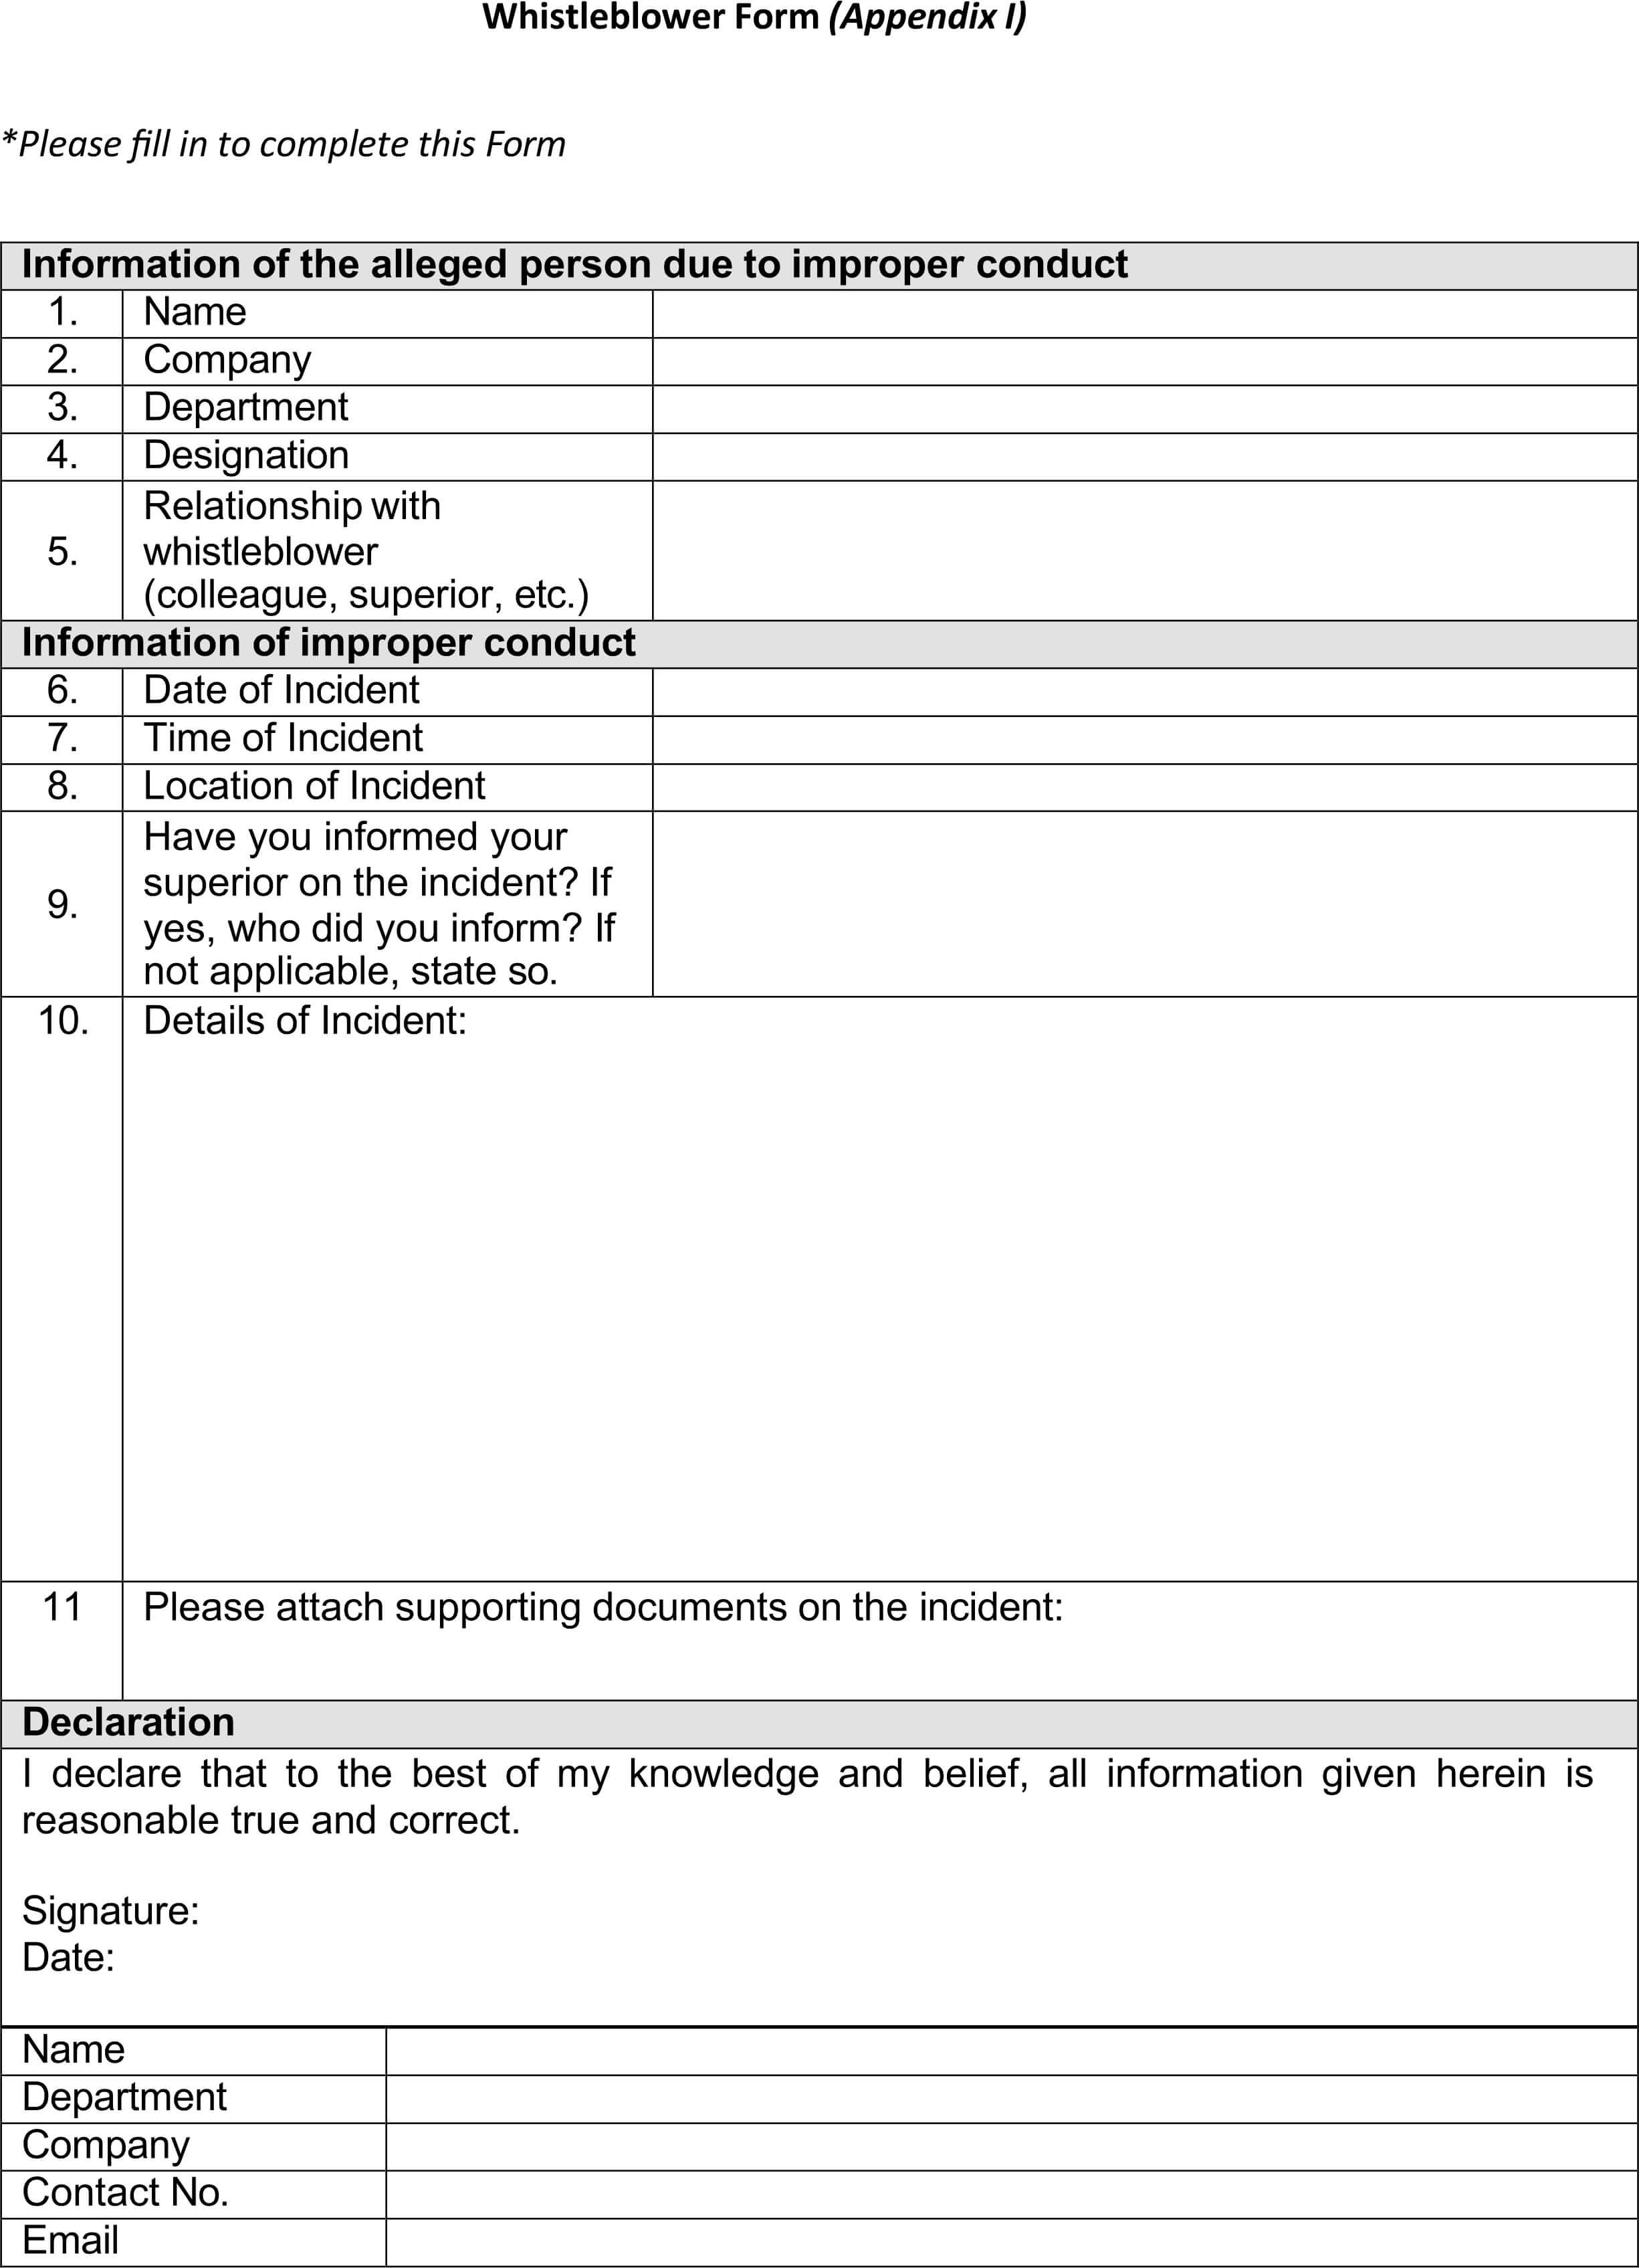 Whistleblower Form (Appendix I)